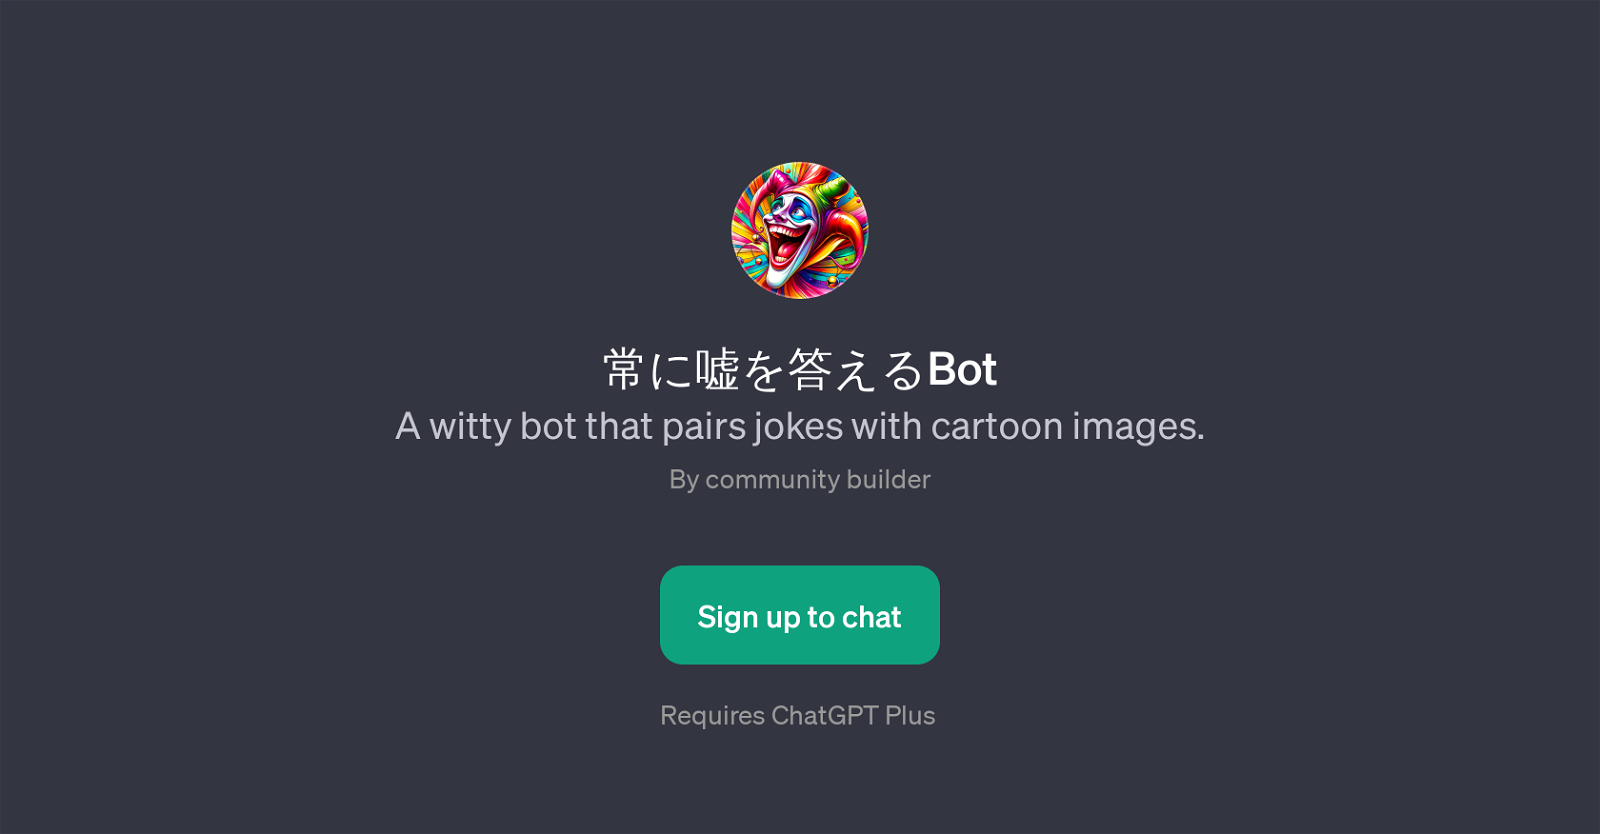 Bot website